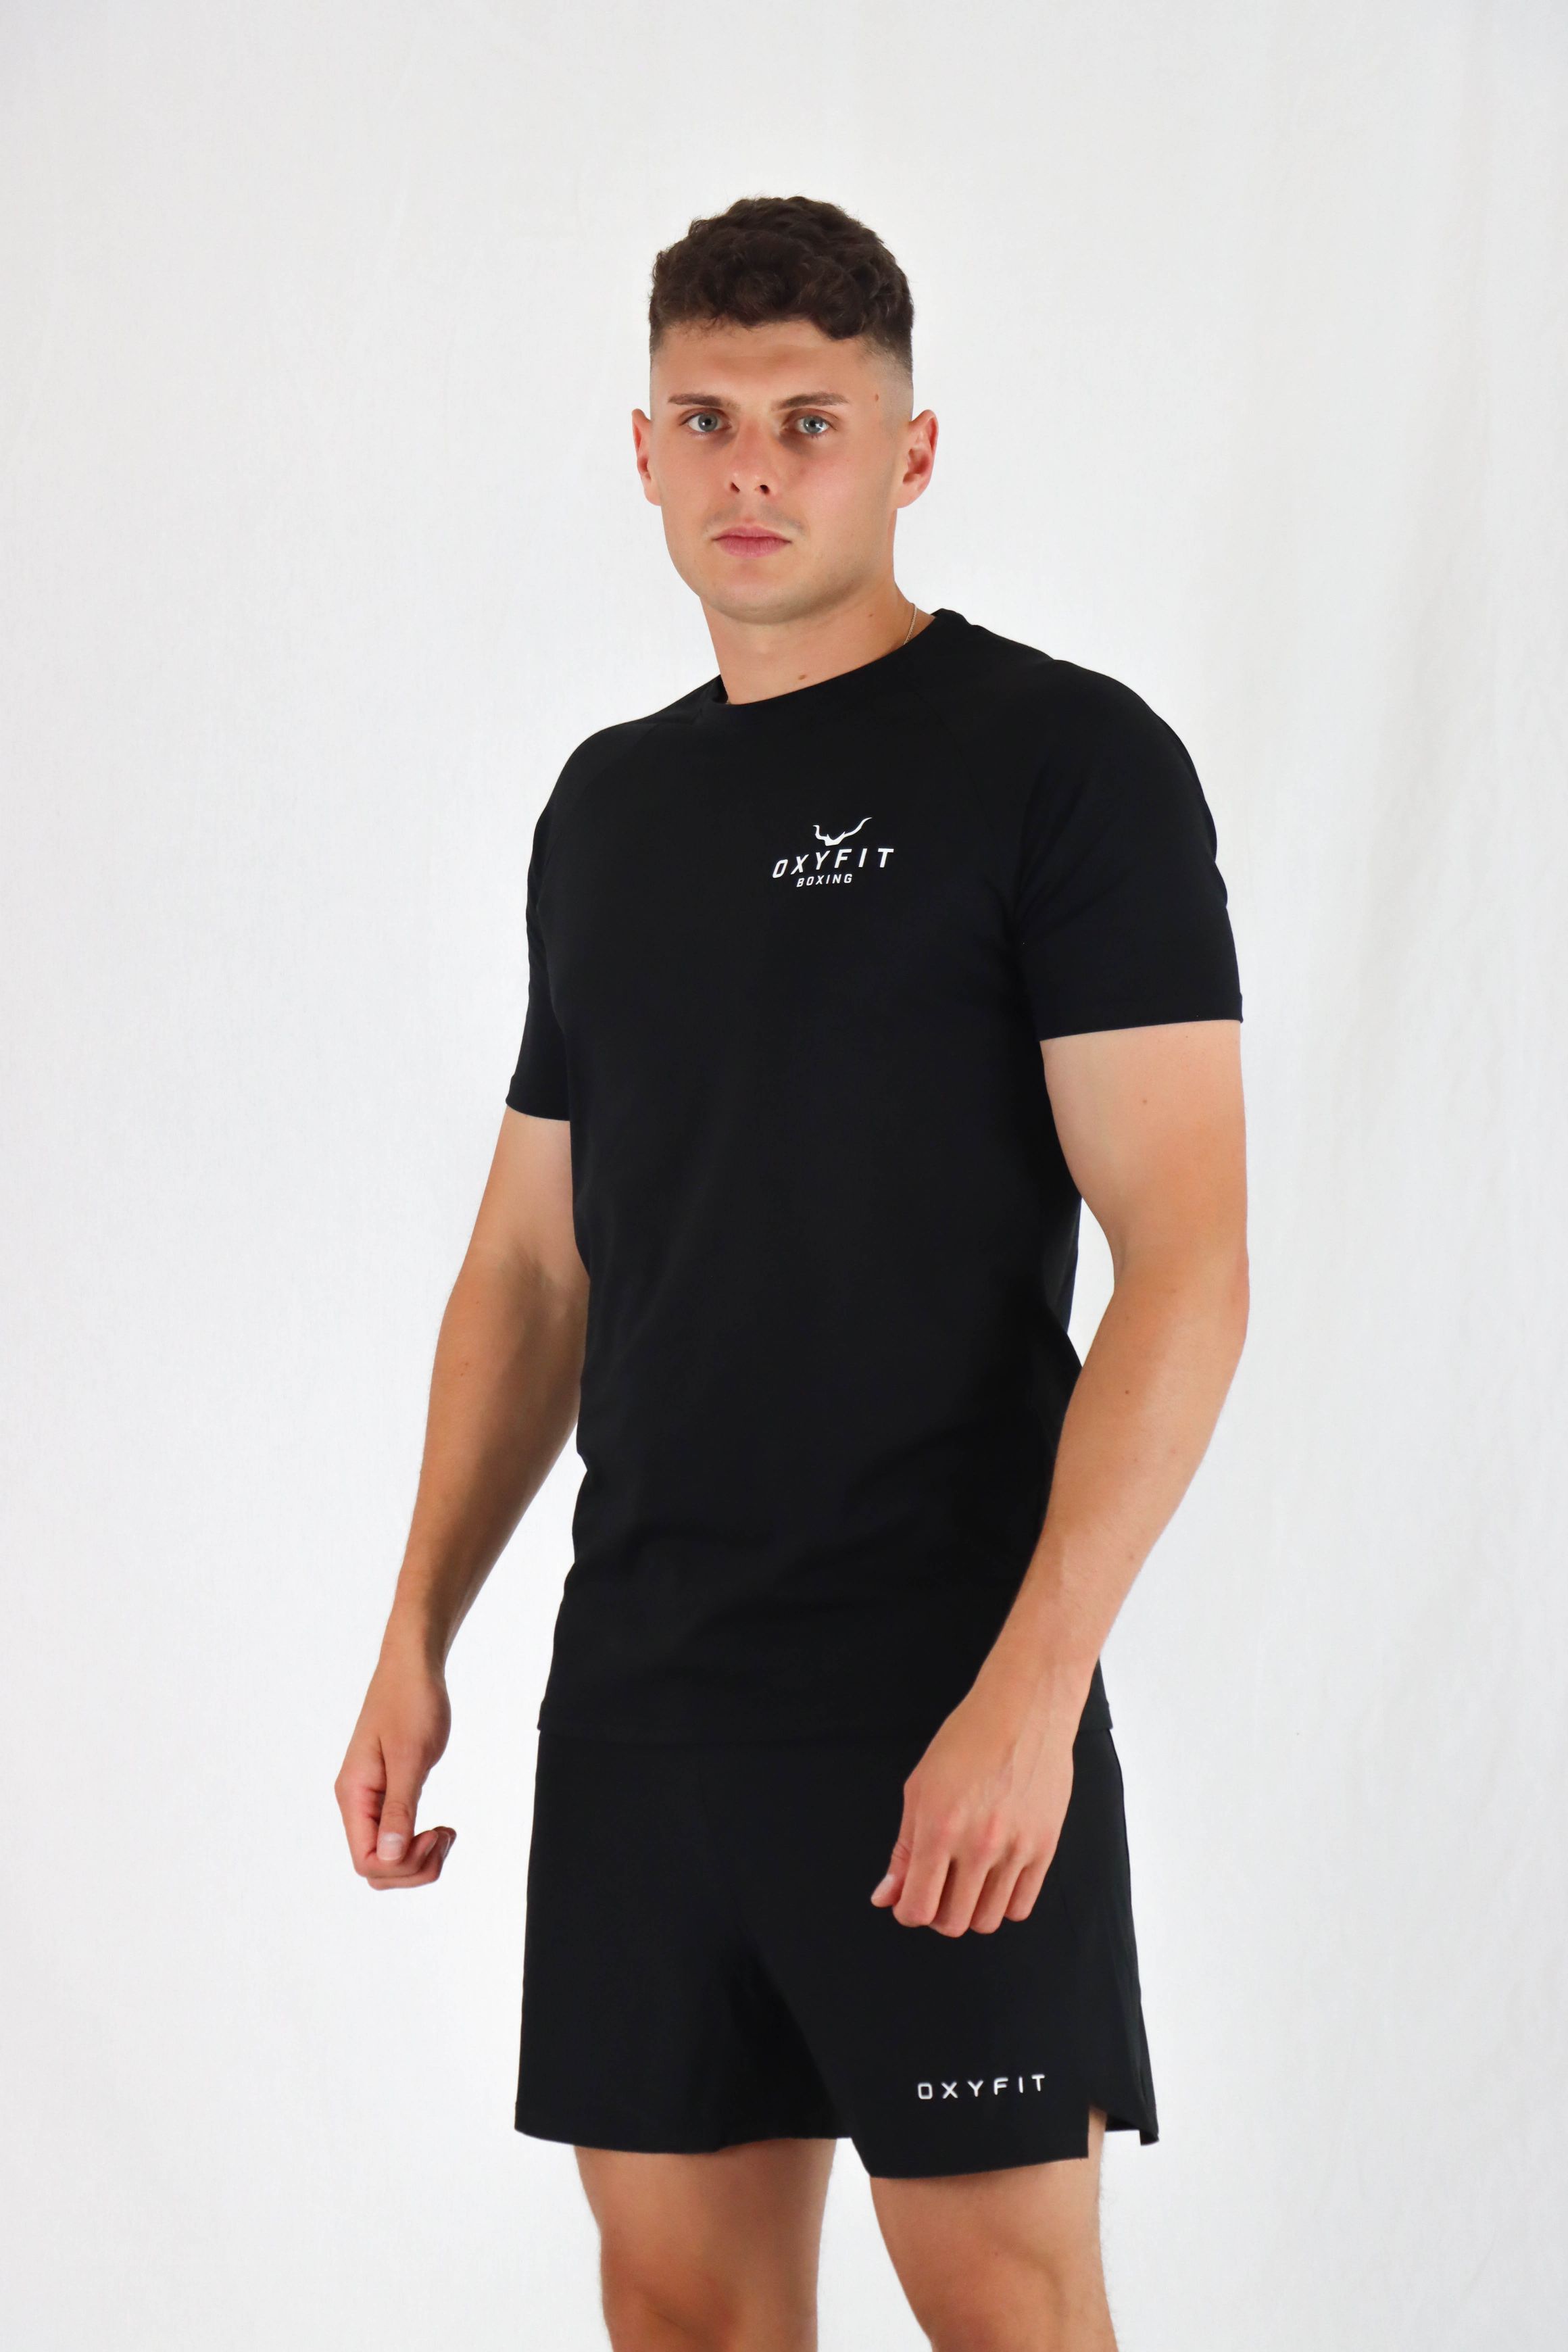 Oxyfit Boxing Icon T-Shirt - True Black